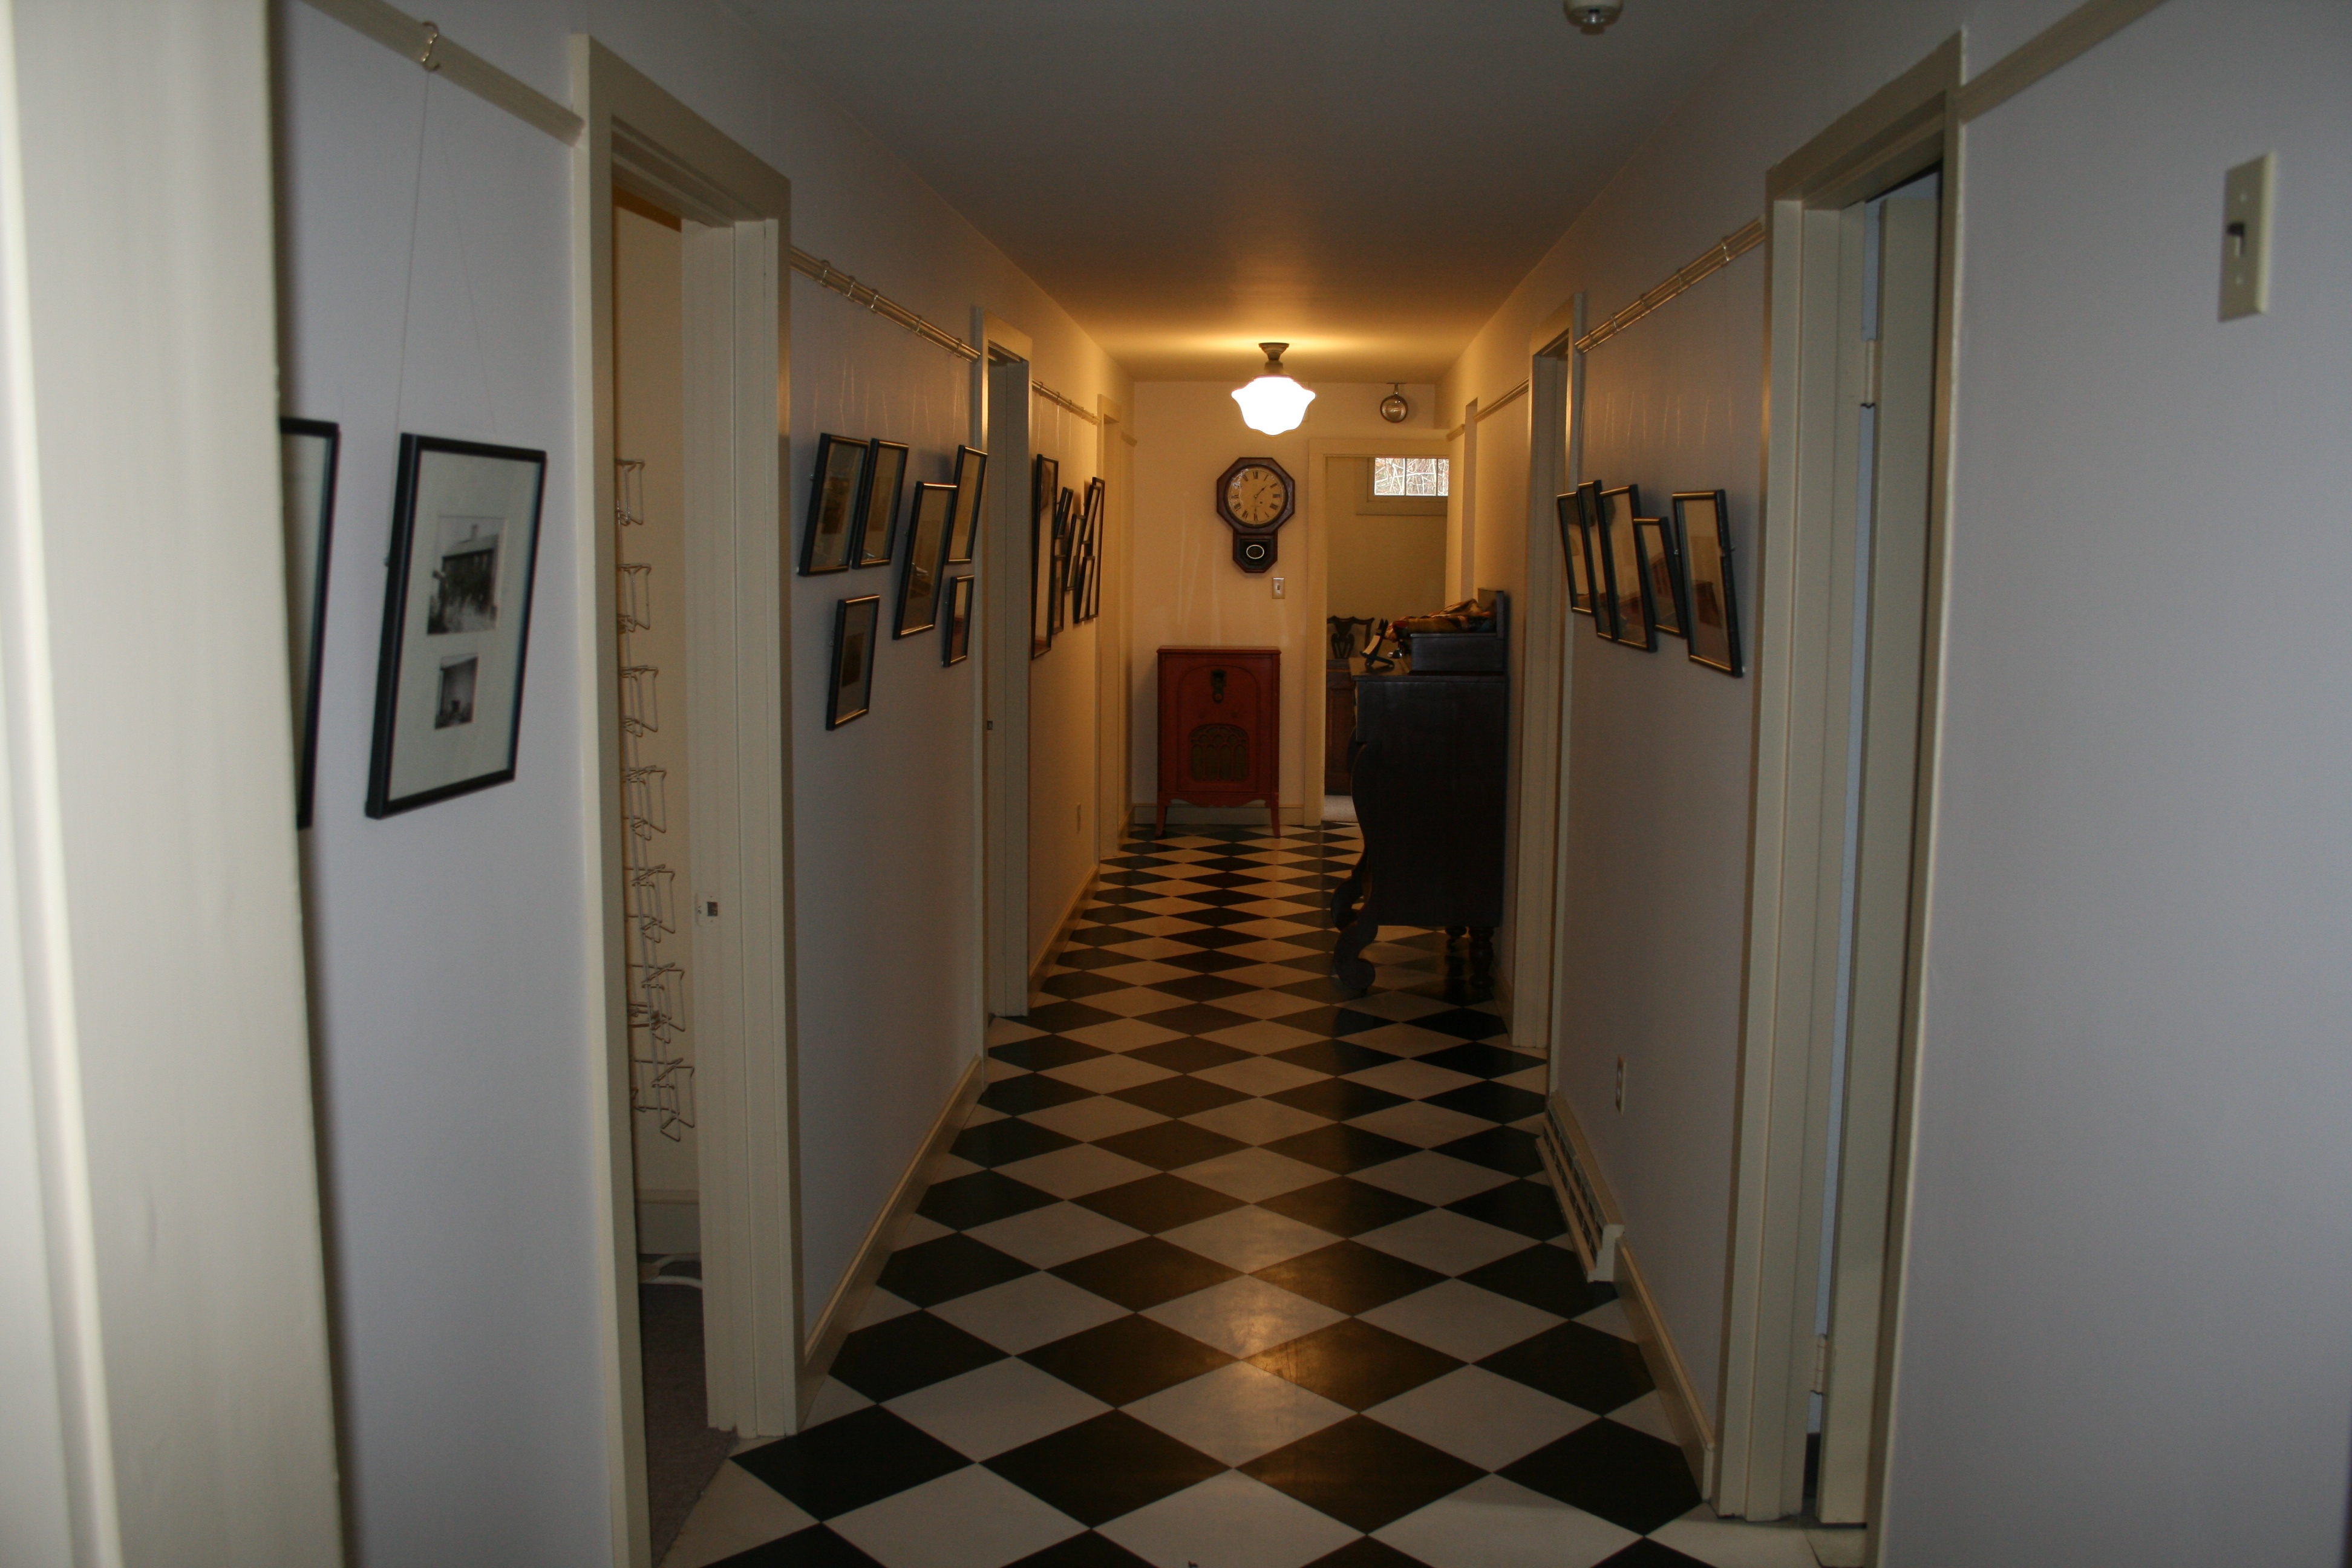 Inside the Plympton Historical Society